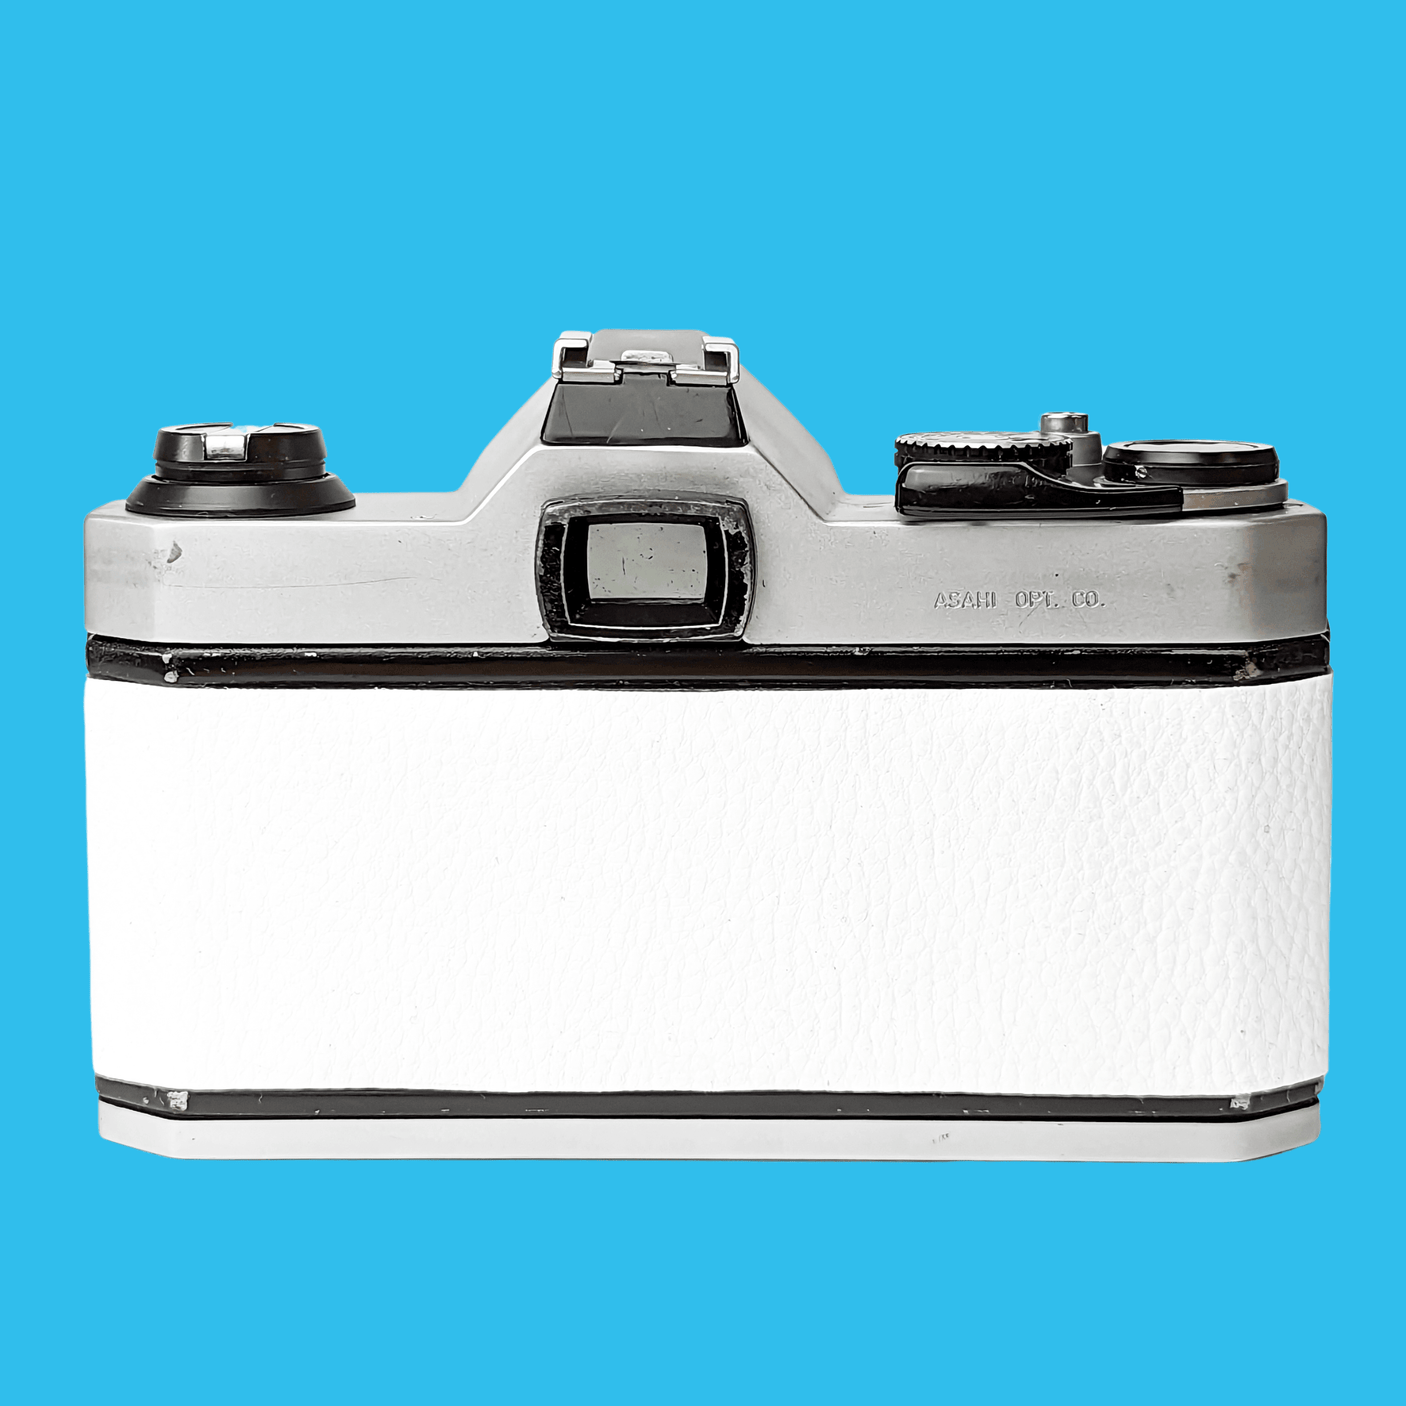 Pentax K1000 White Leather Vintage SLR 35mm Film Camera with Pentax f/2 50mm Prime Lens.